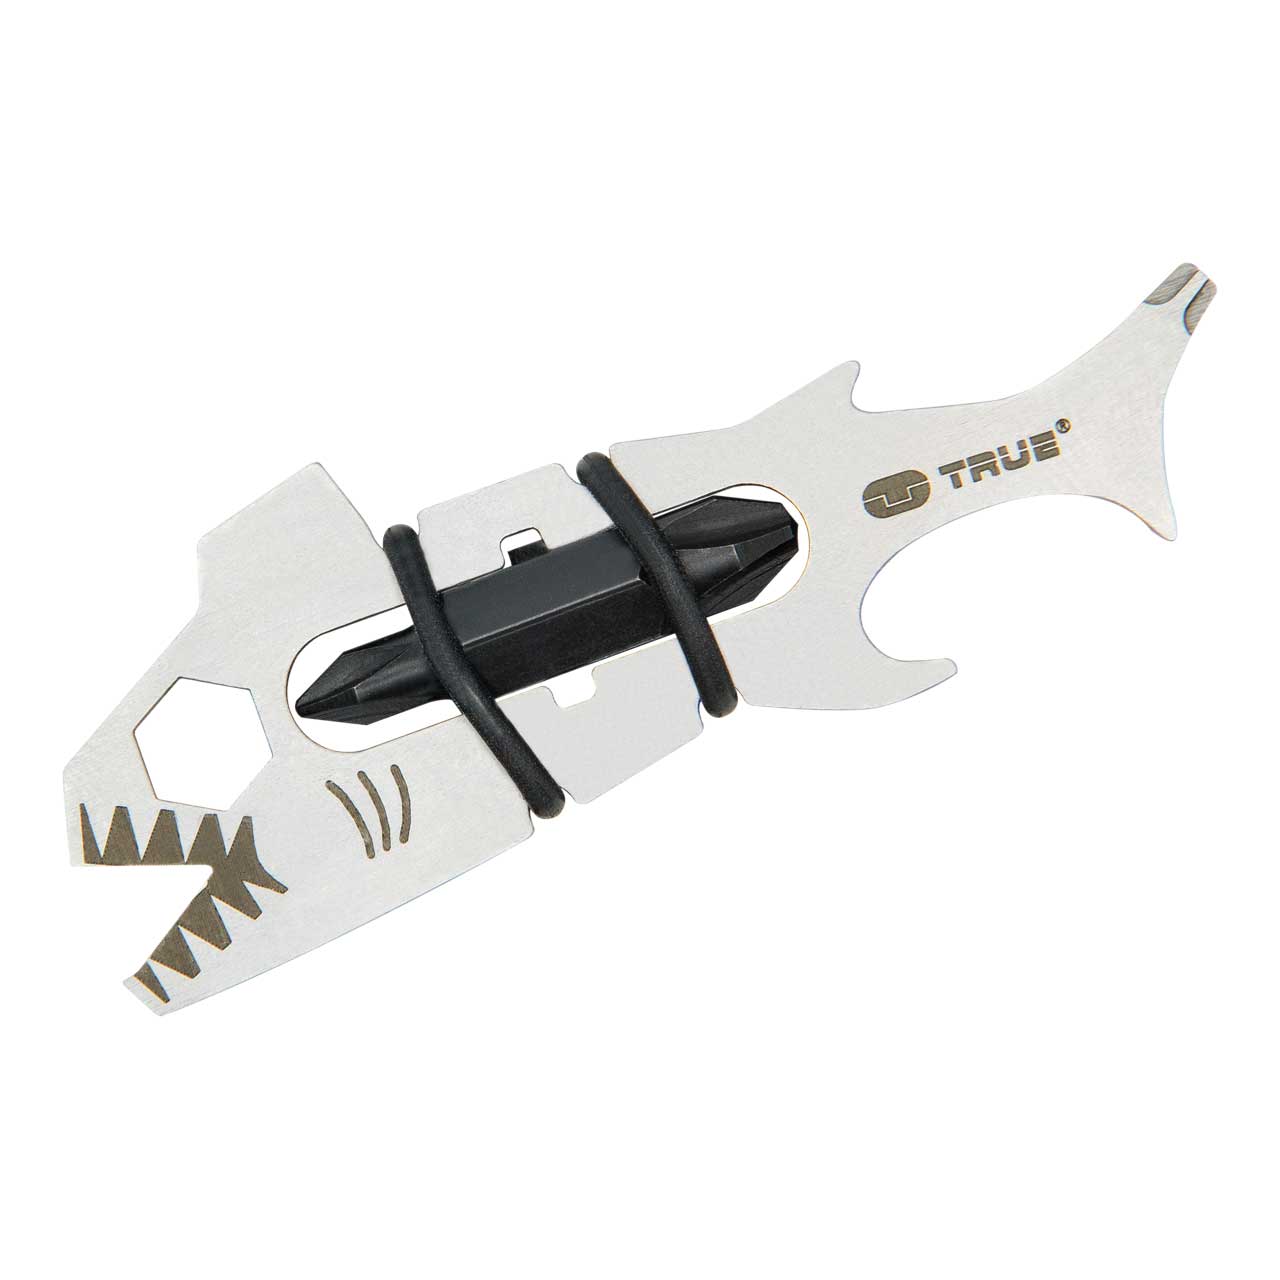 Multi-Tool Sharkey True Utility